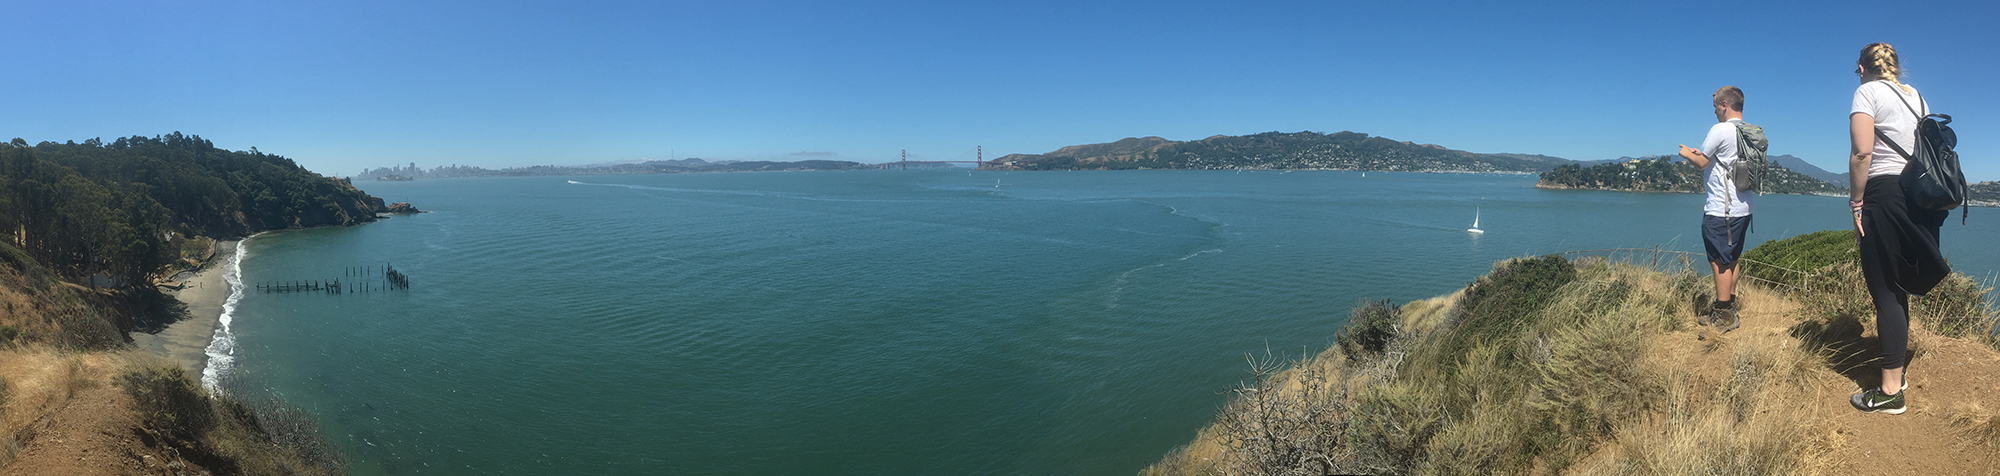 Angel Island Panorama of Golden Gate Bridge from Hill